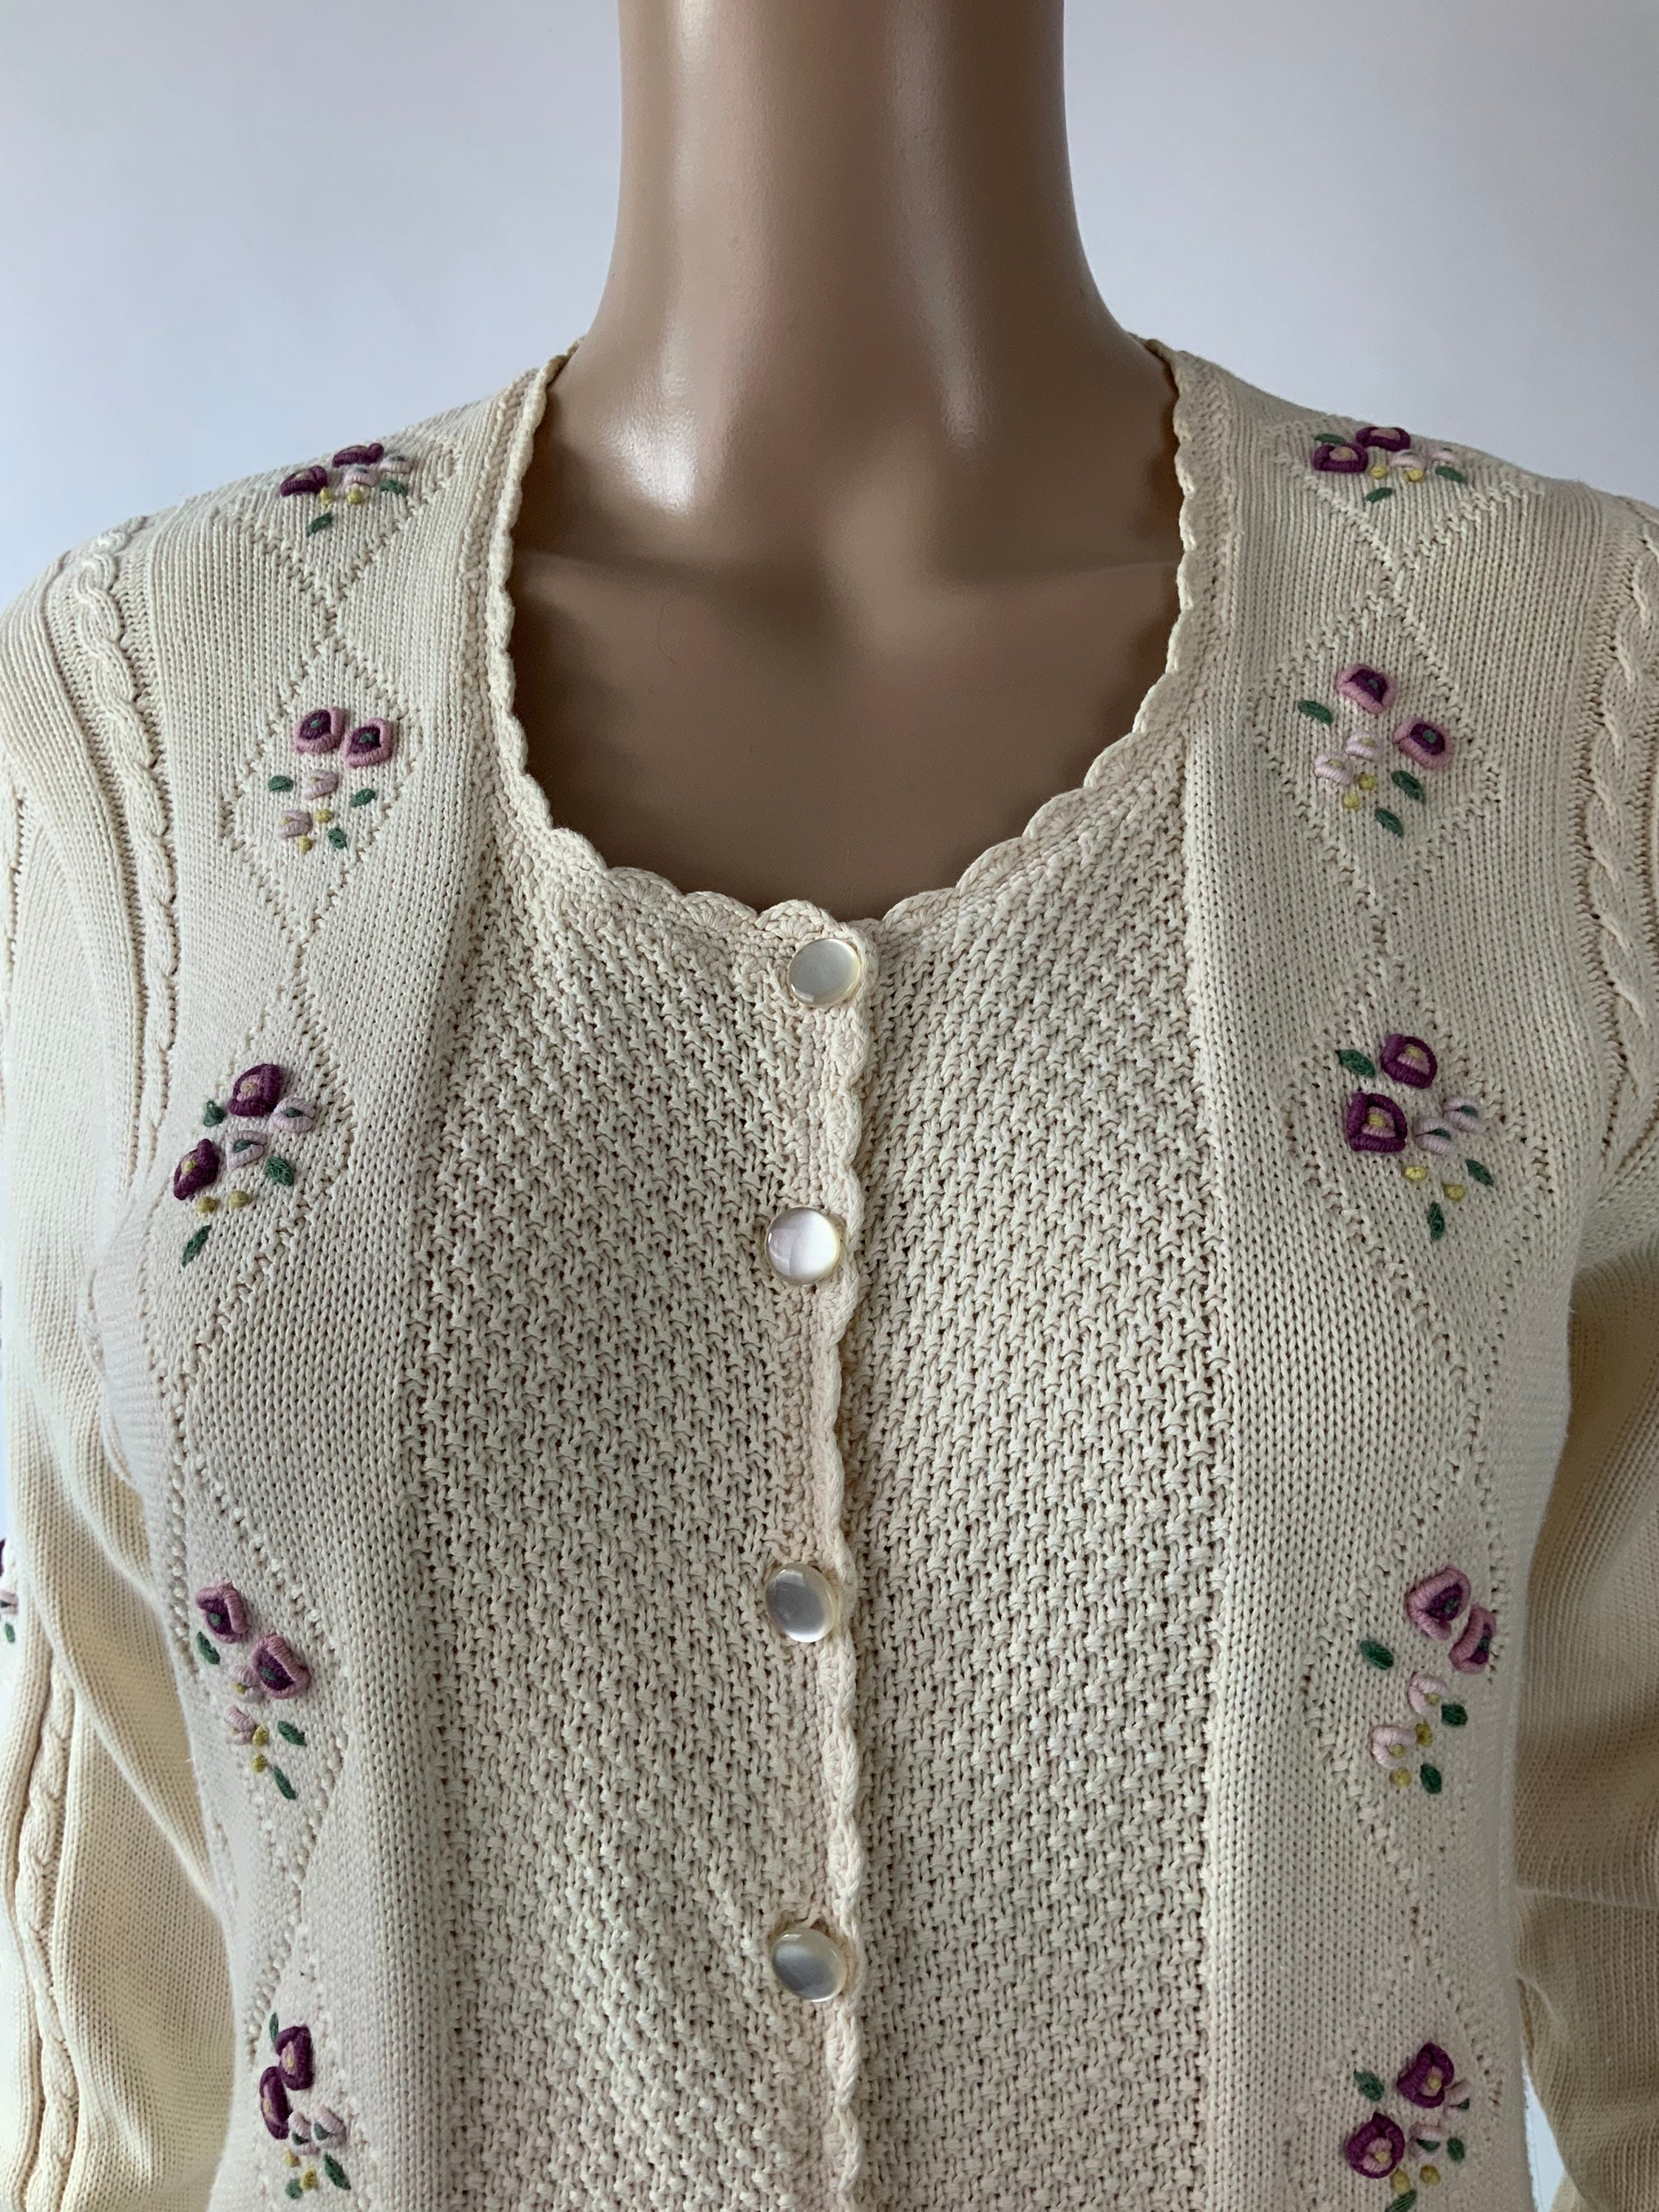 LAURA ASHLEY Floral Vintage Cardigan / White Cotton Summer | Etsy